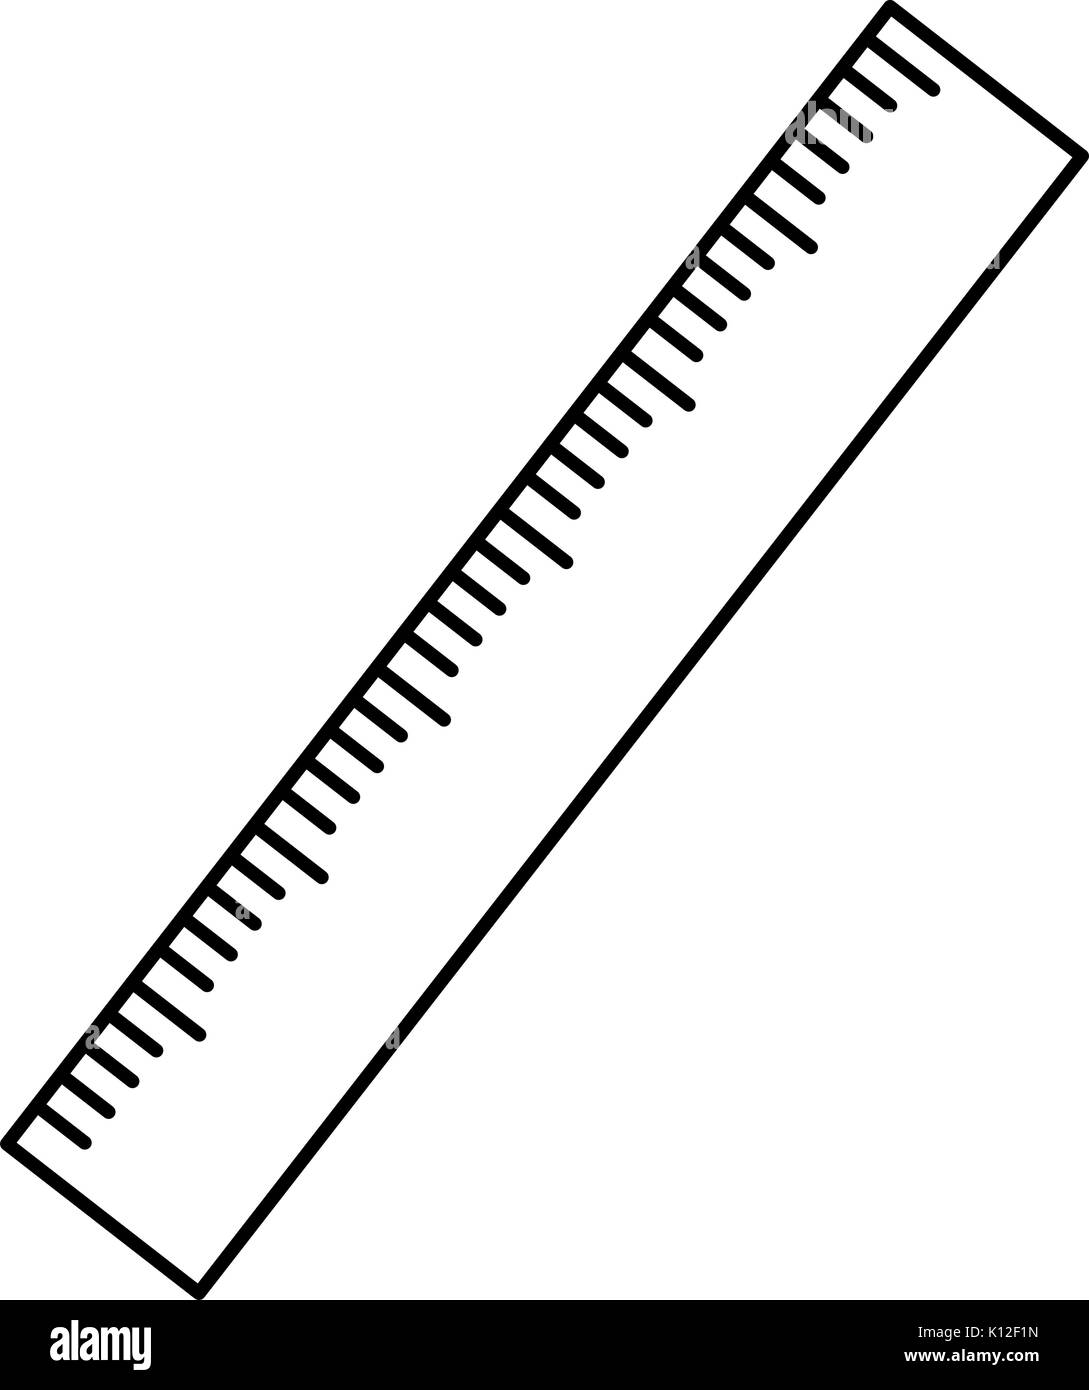 https://c8.alamy.com/comp/K12F1N/ruler-measure-tool-icon-vector-illustration-graphic-design-K12F1N.jpg